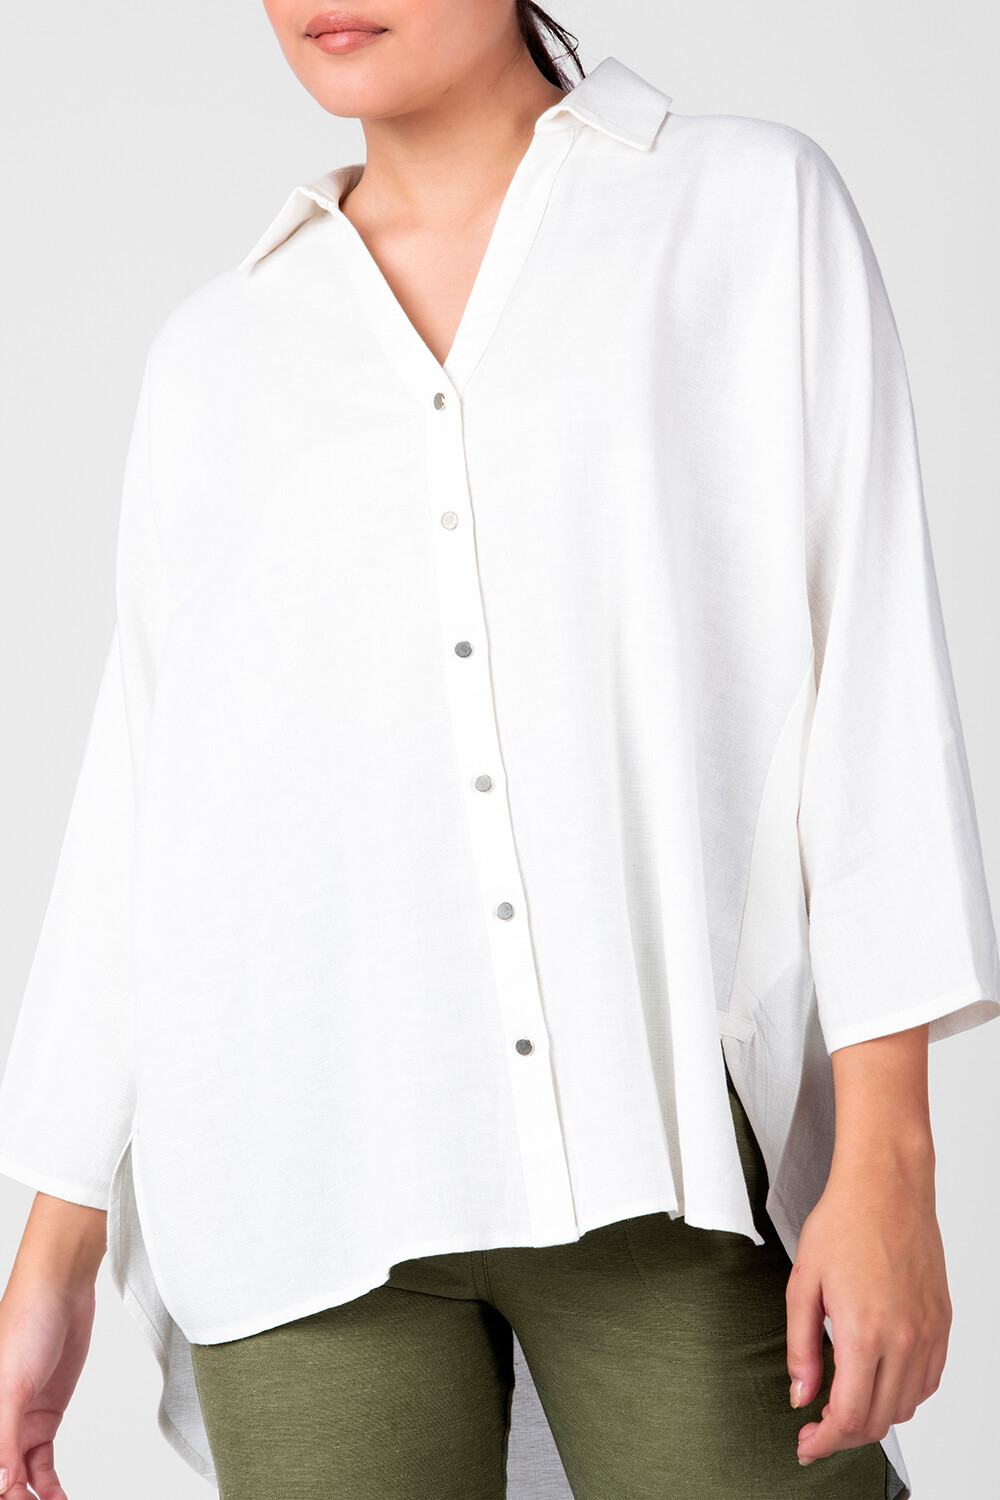 Camisa Sangiuliano Marfil / Off White